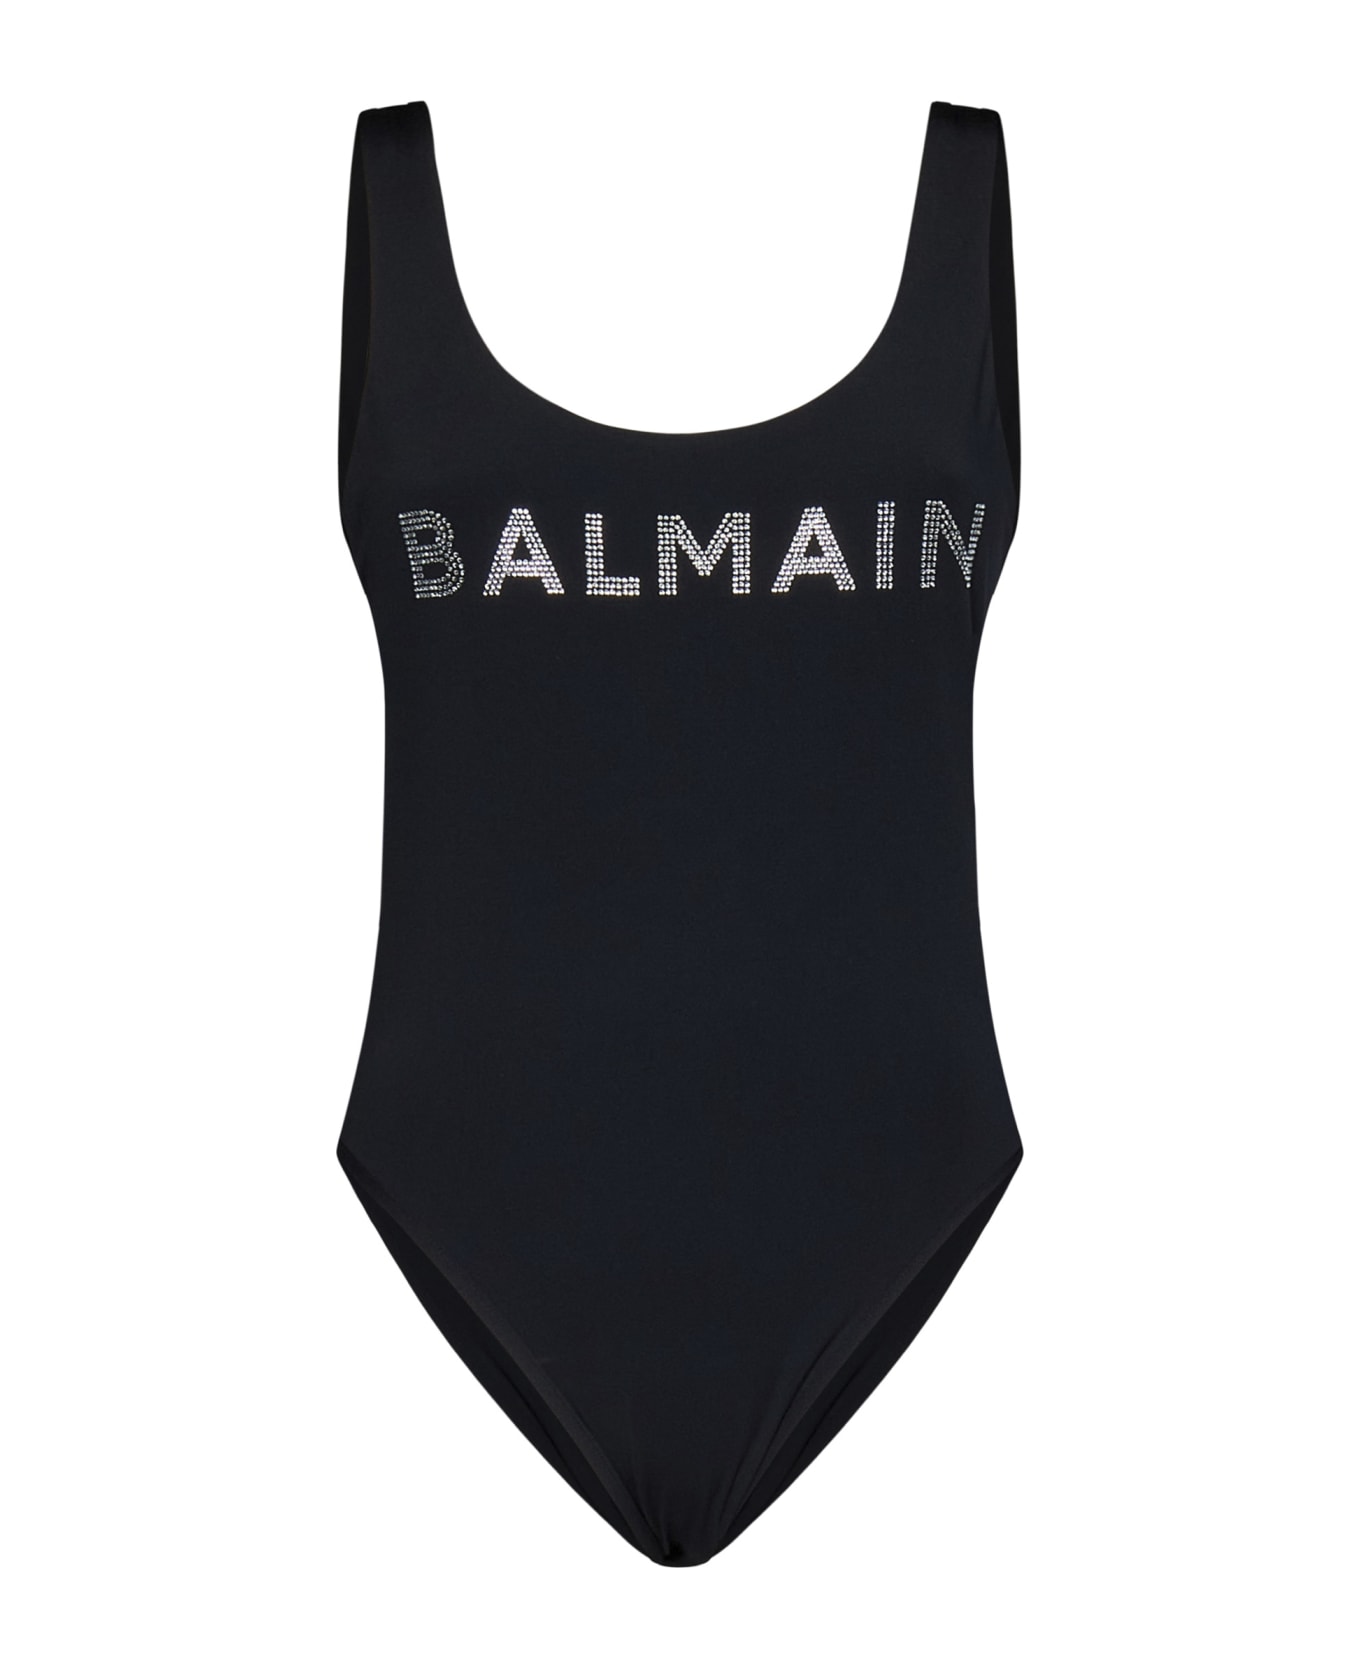 Balmain Swimsuit - Black 水着